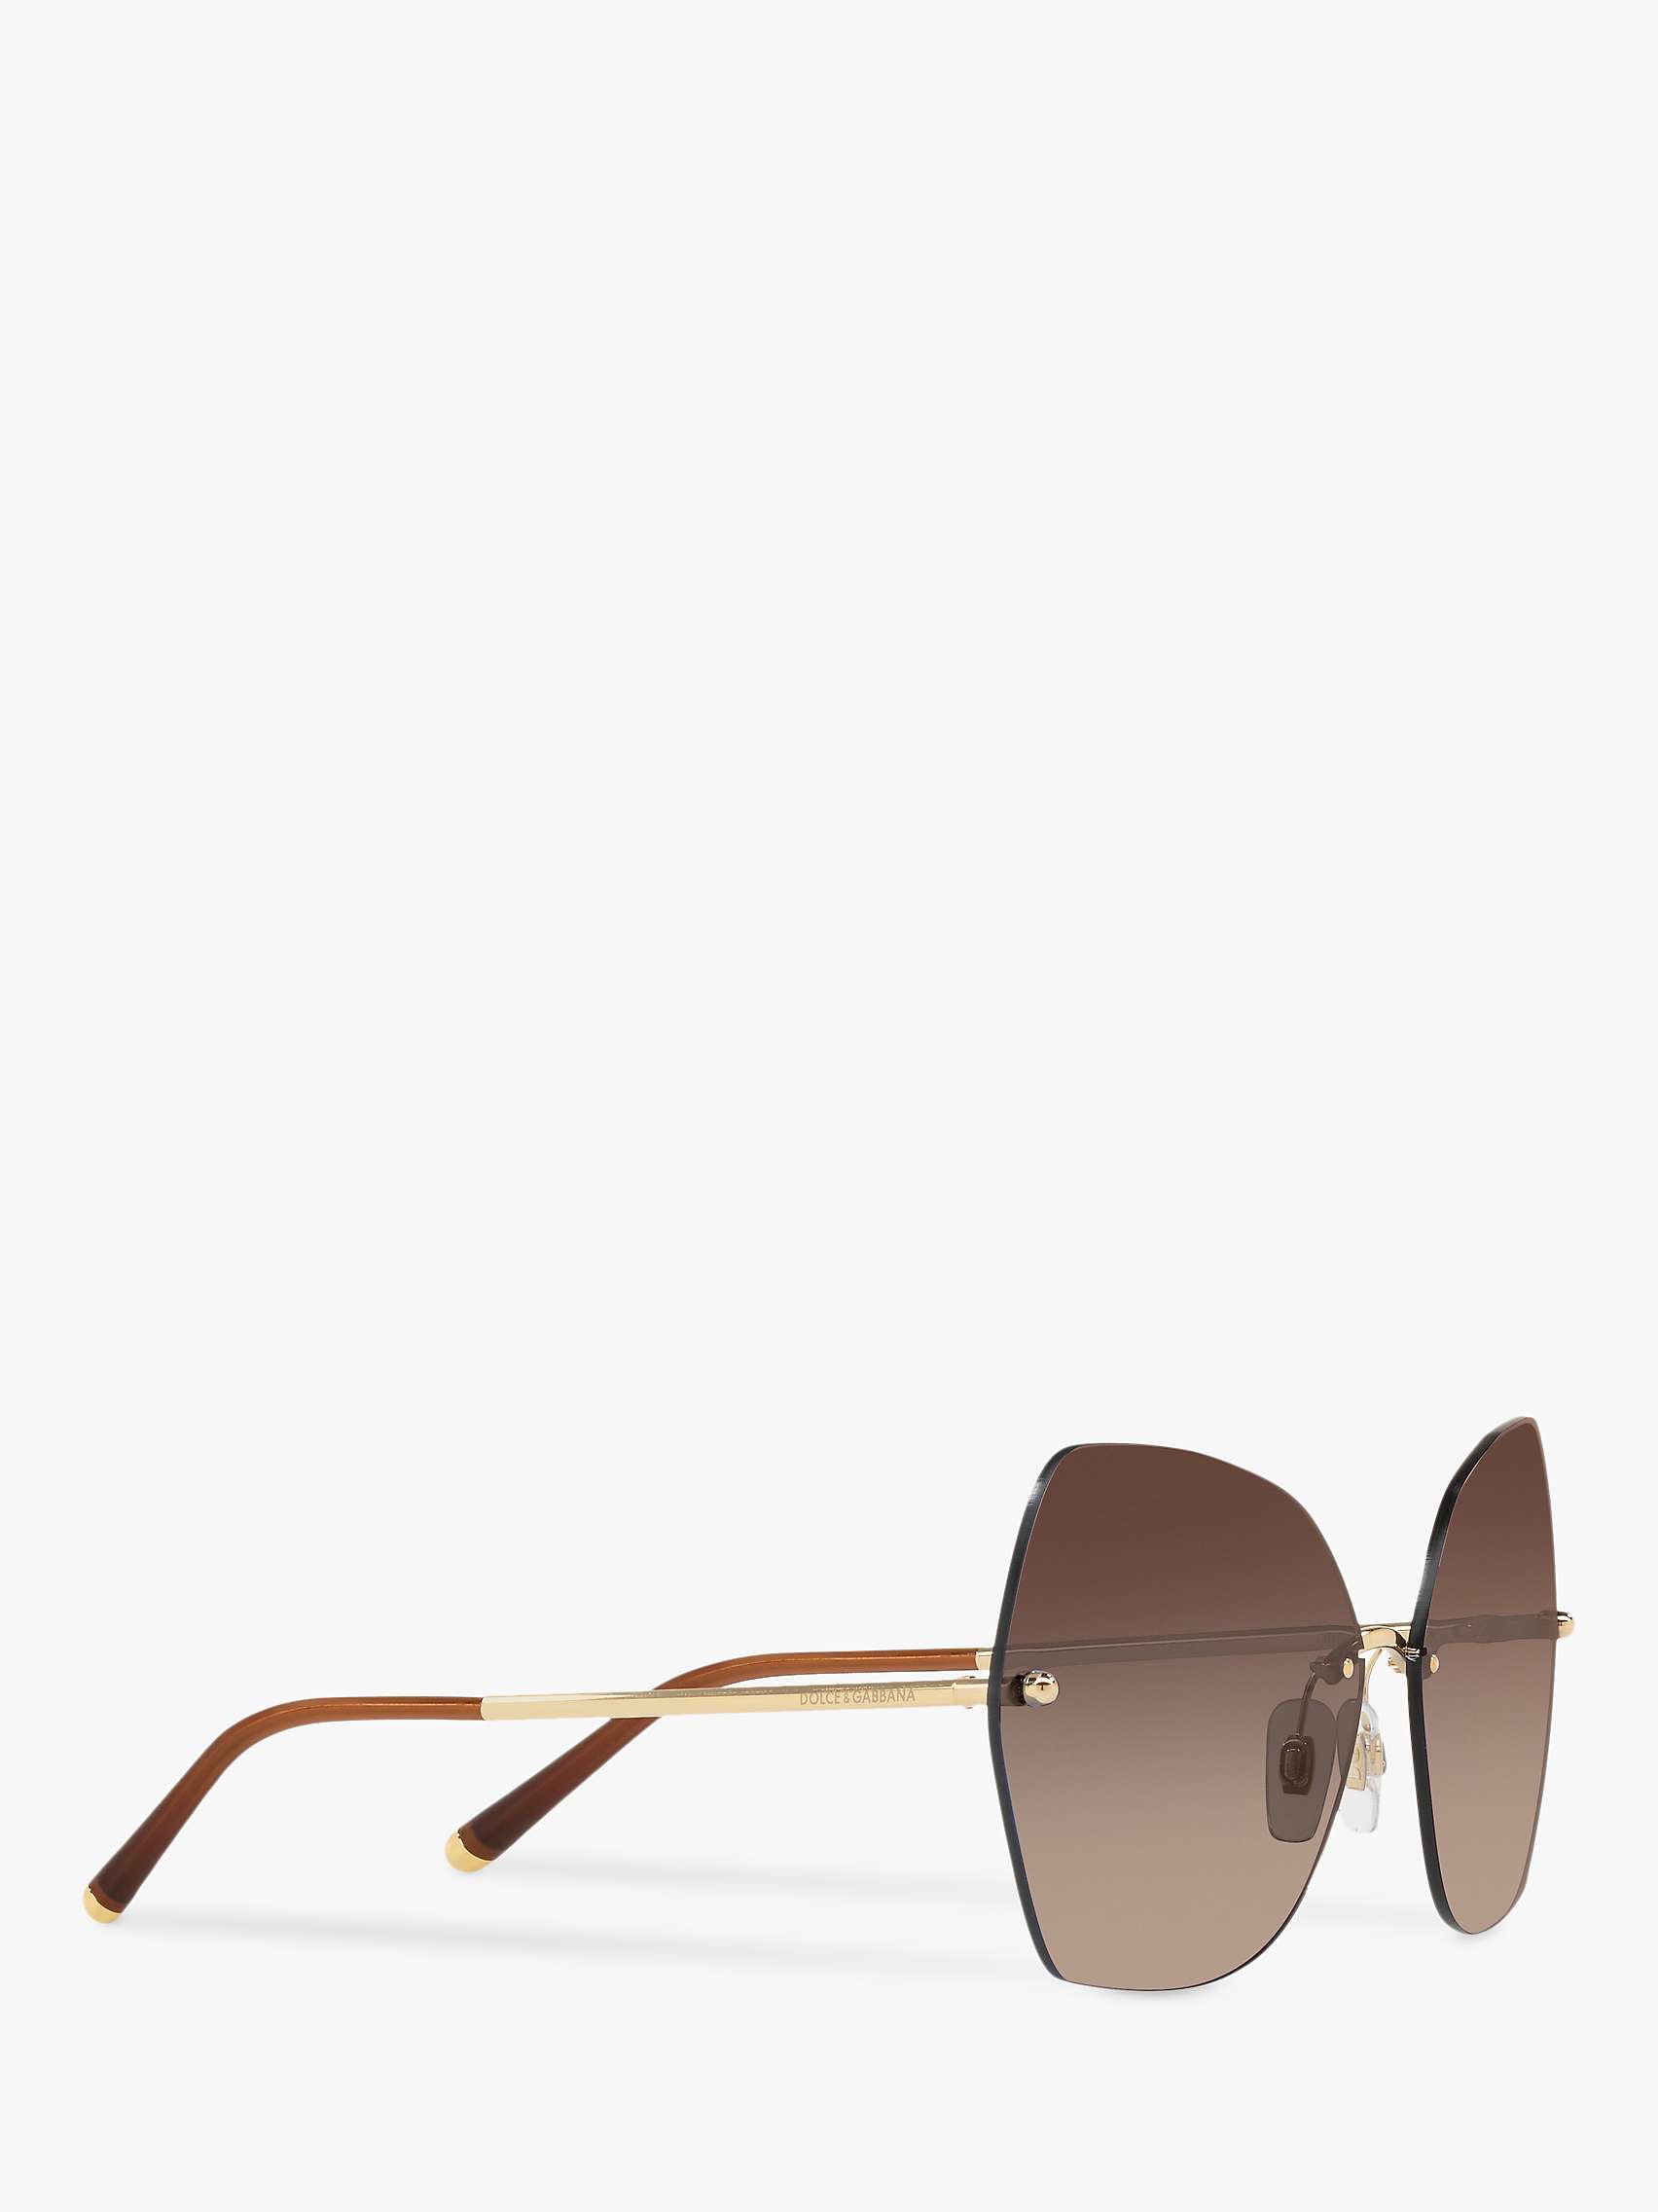 Buy Dolce & Gabbana DG2204 Women's Geometric Sunglasses, Gold/Brown Gradient Online at johnlewis.com